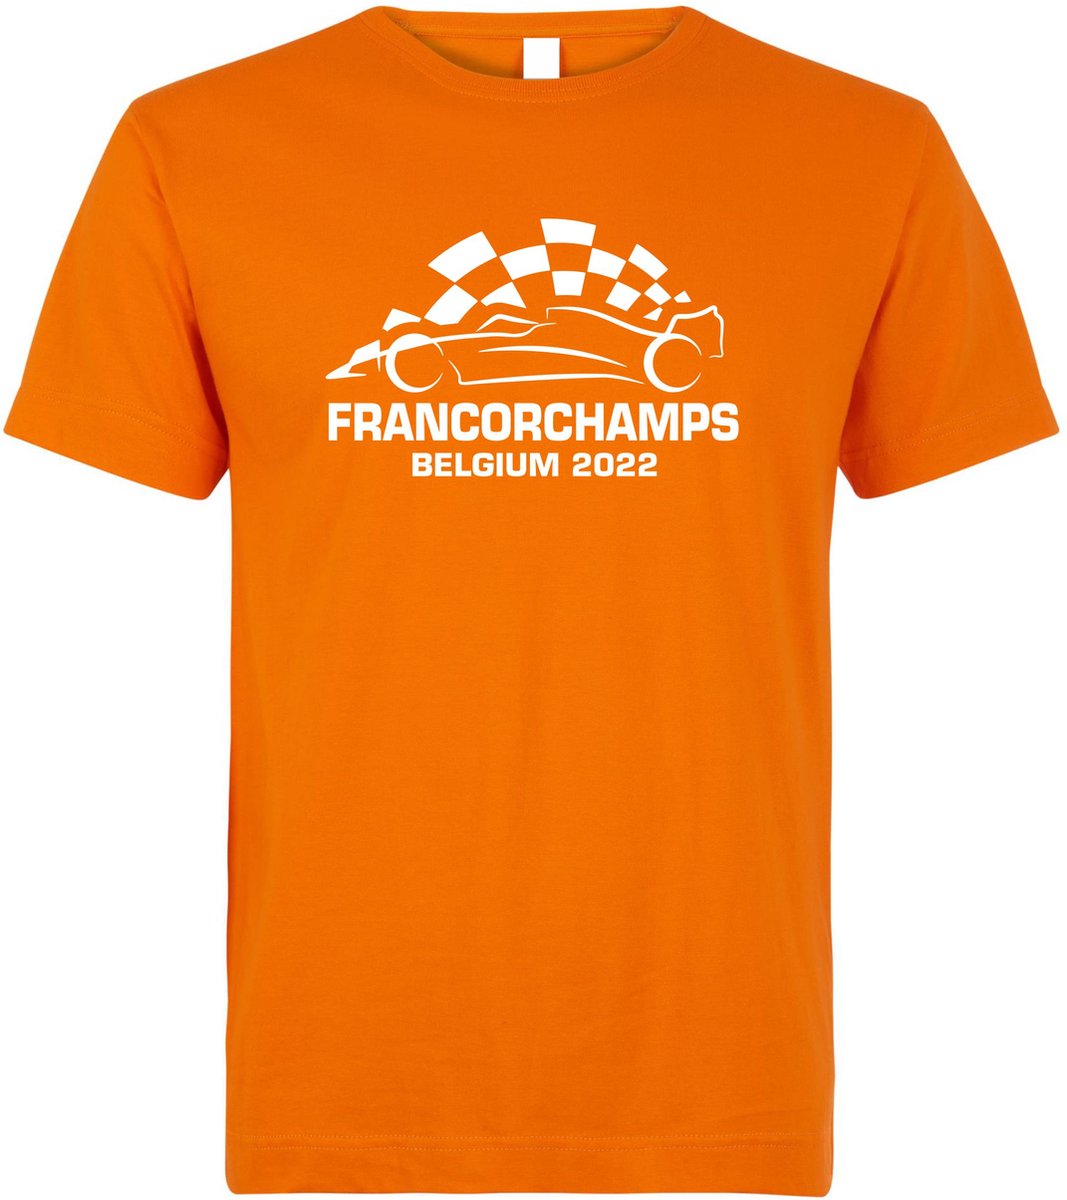 T-shirt Francorchamps Belgium 2022 met raceauto | Max Verstappen / Red Bull Racing / Formule 1 fan | Grand Prix Circuit Spa-Francorchamps | kleding shirt | Oranje | maat M